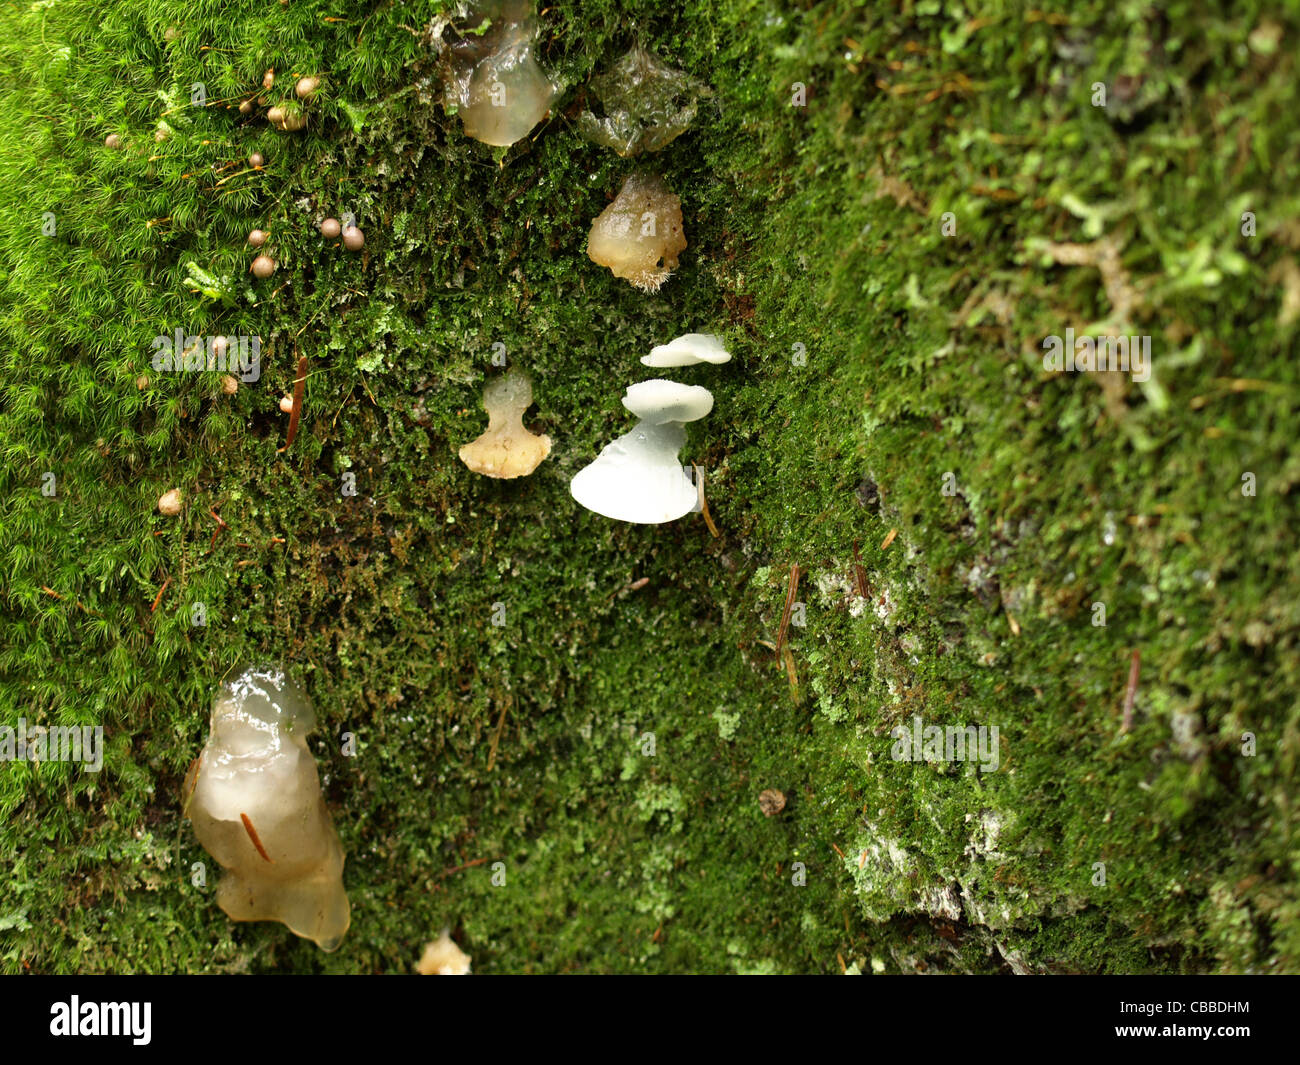 toothed jelly fungus, white jelly mushroom, false hedgehog mushroom / Pseudohydnum gelatinosum / Eispilze Stock Photo